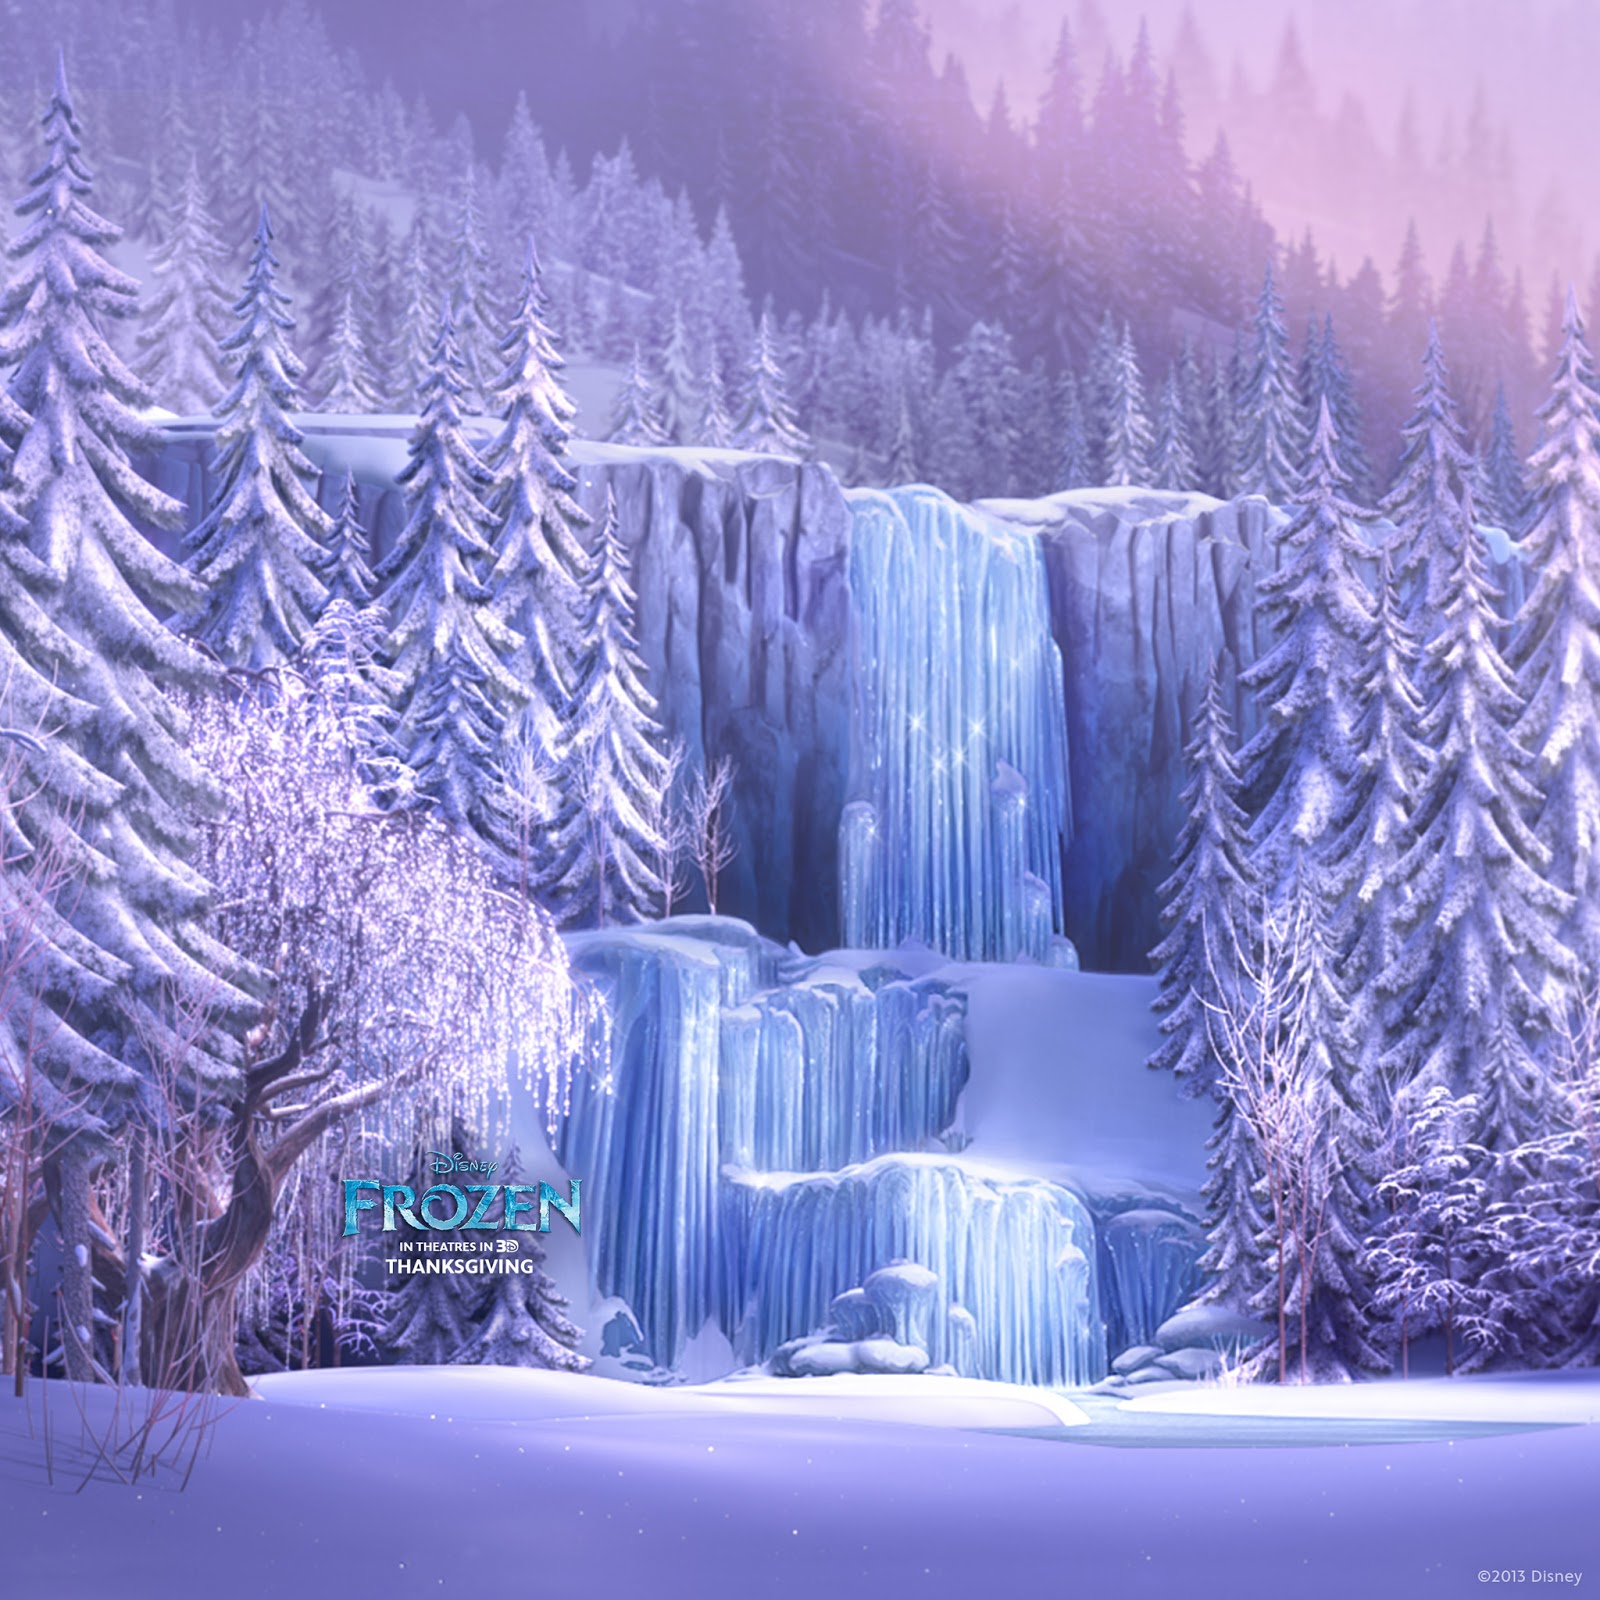 48+] Disney Frozen Wallpaper for Tablets - WallpaperSafari